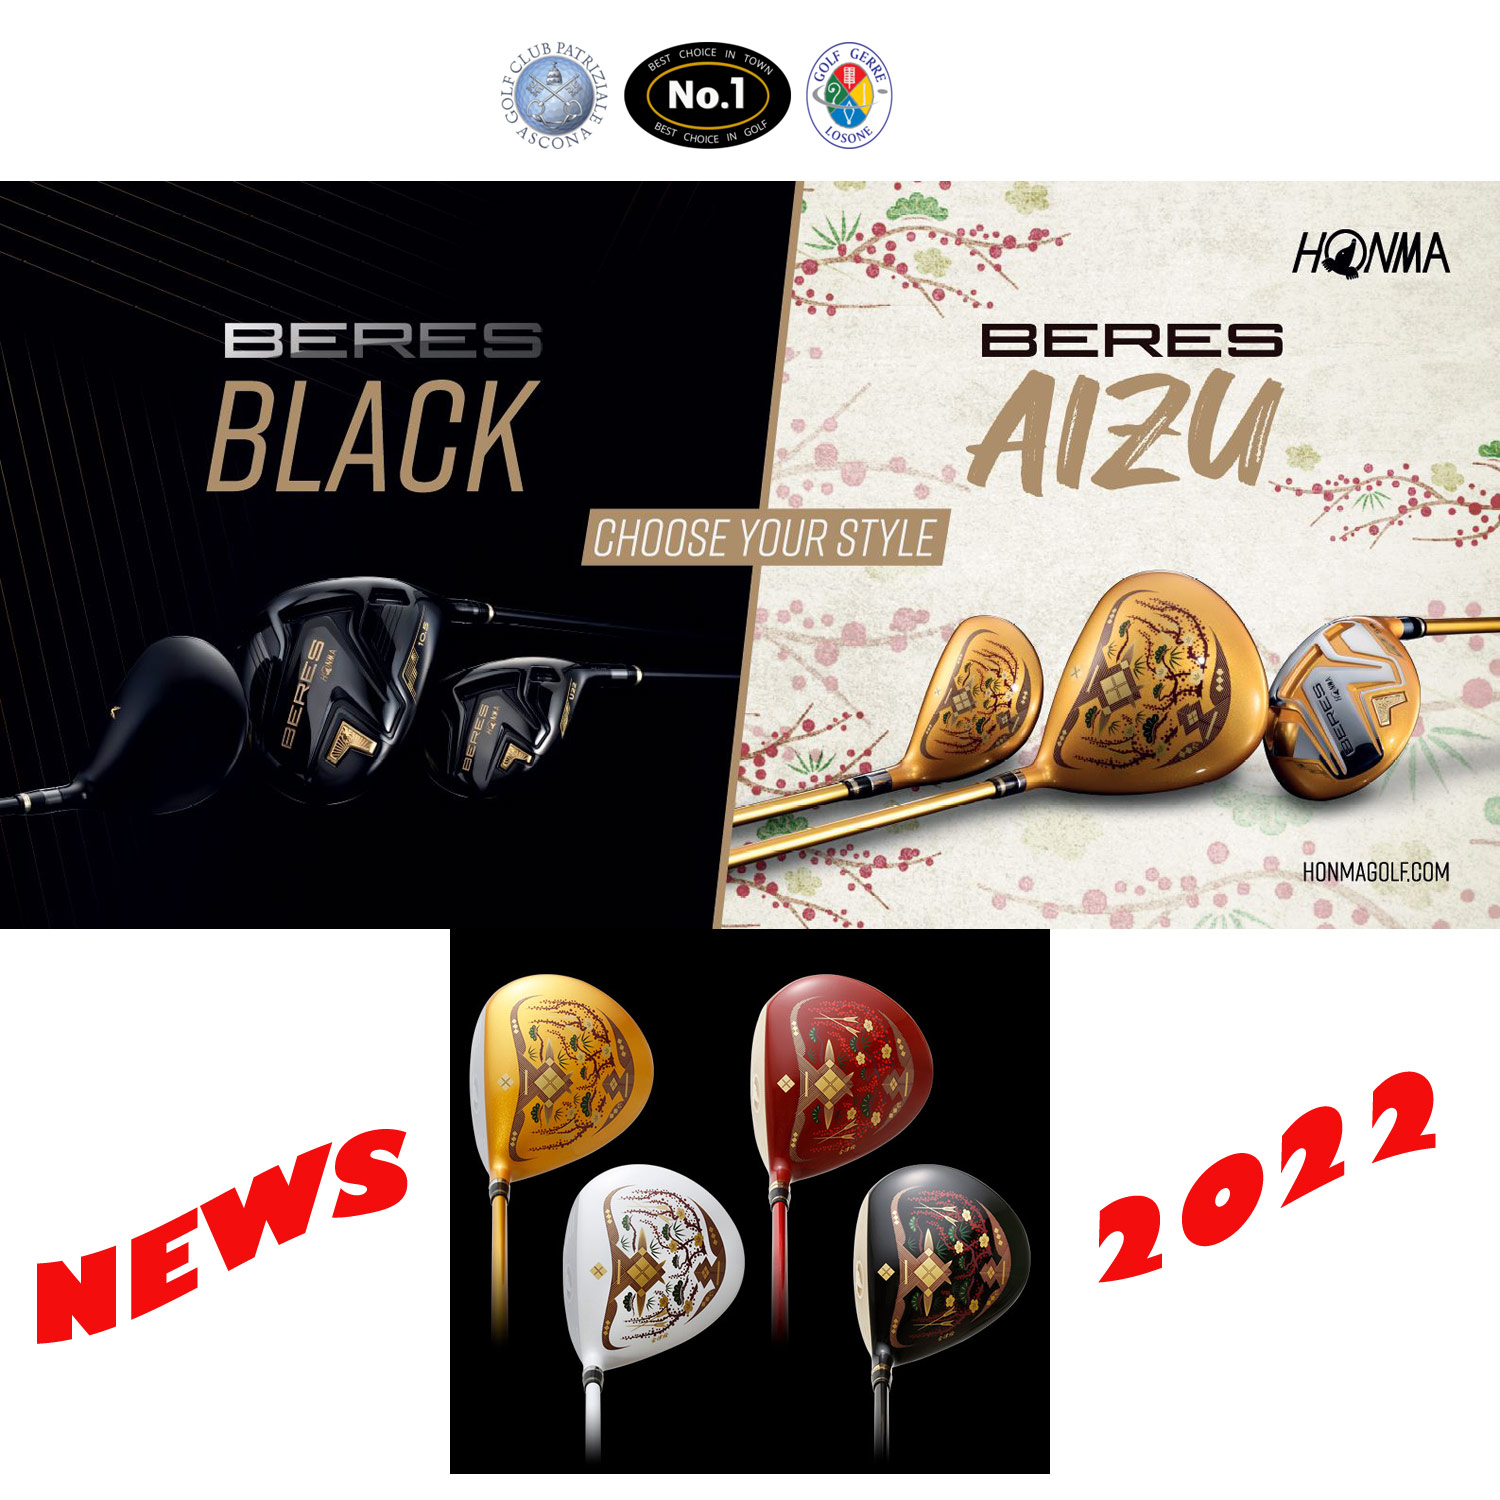 HONMA BERES AIZU NEWS 2022